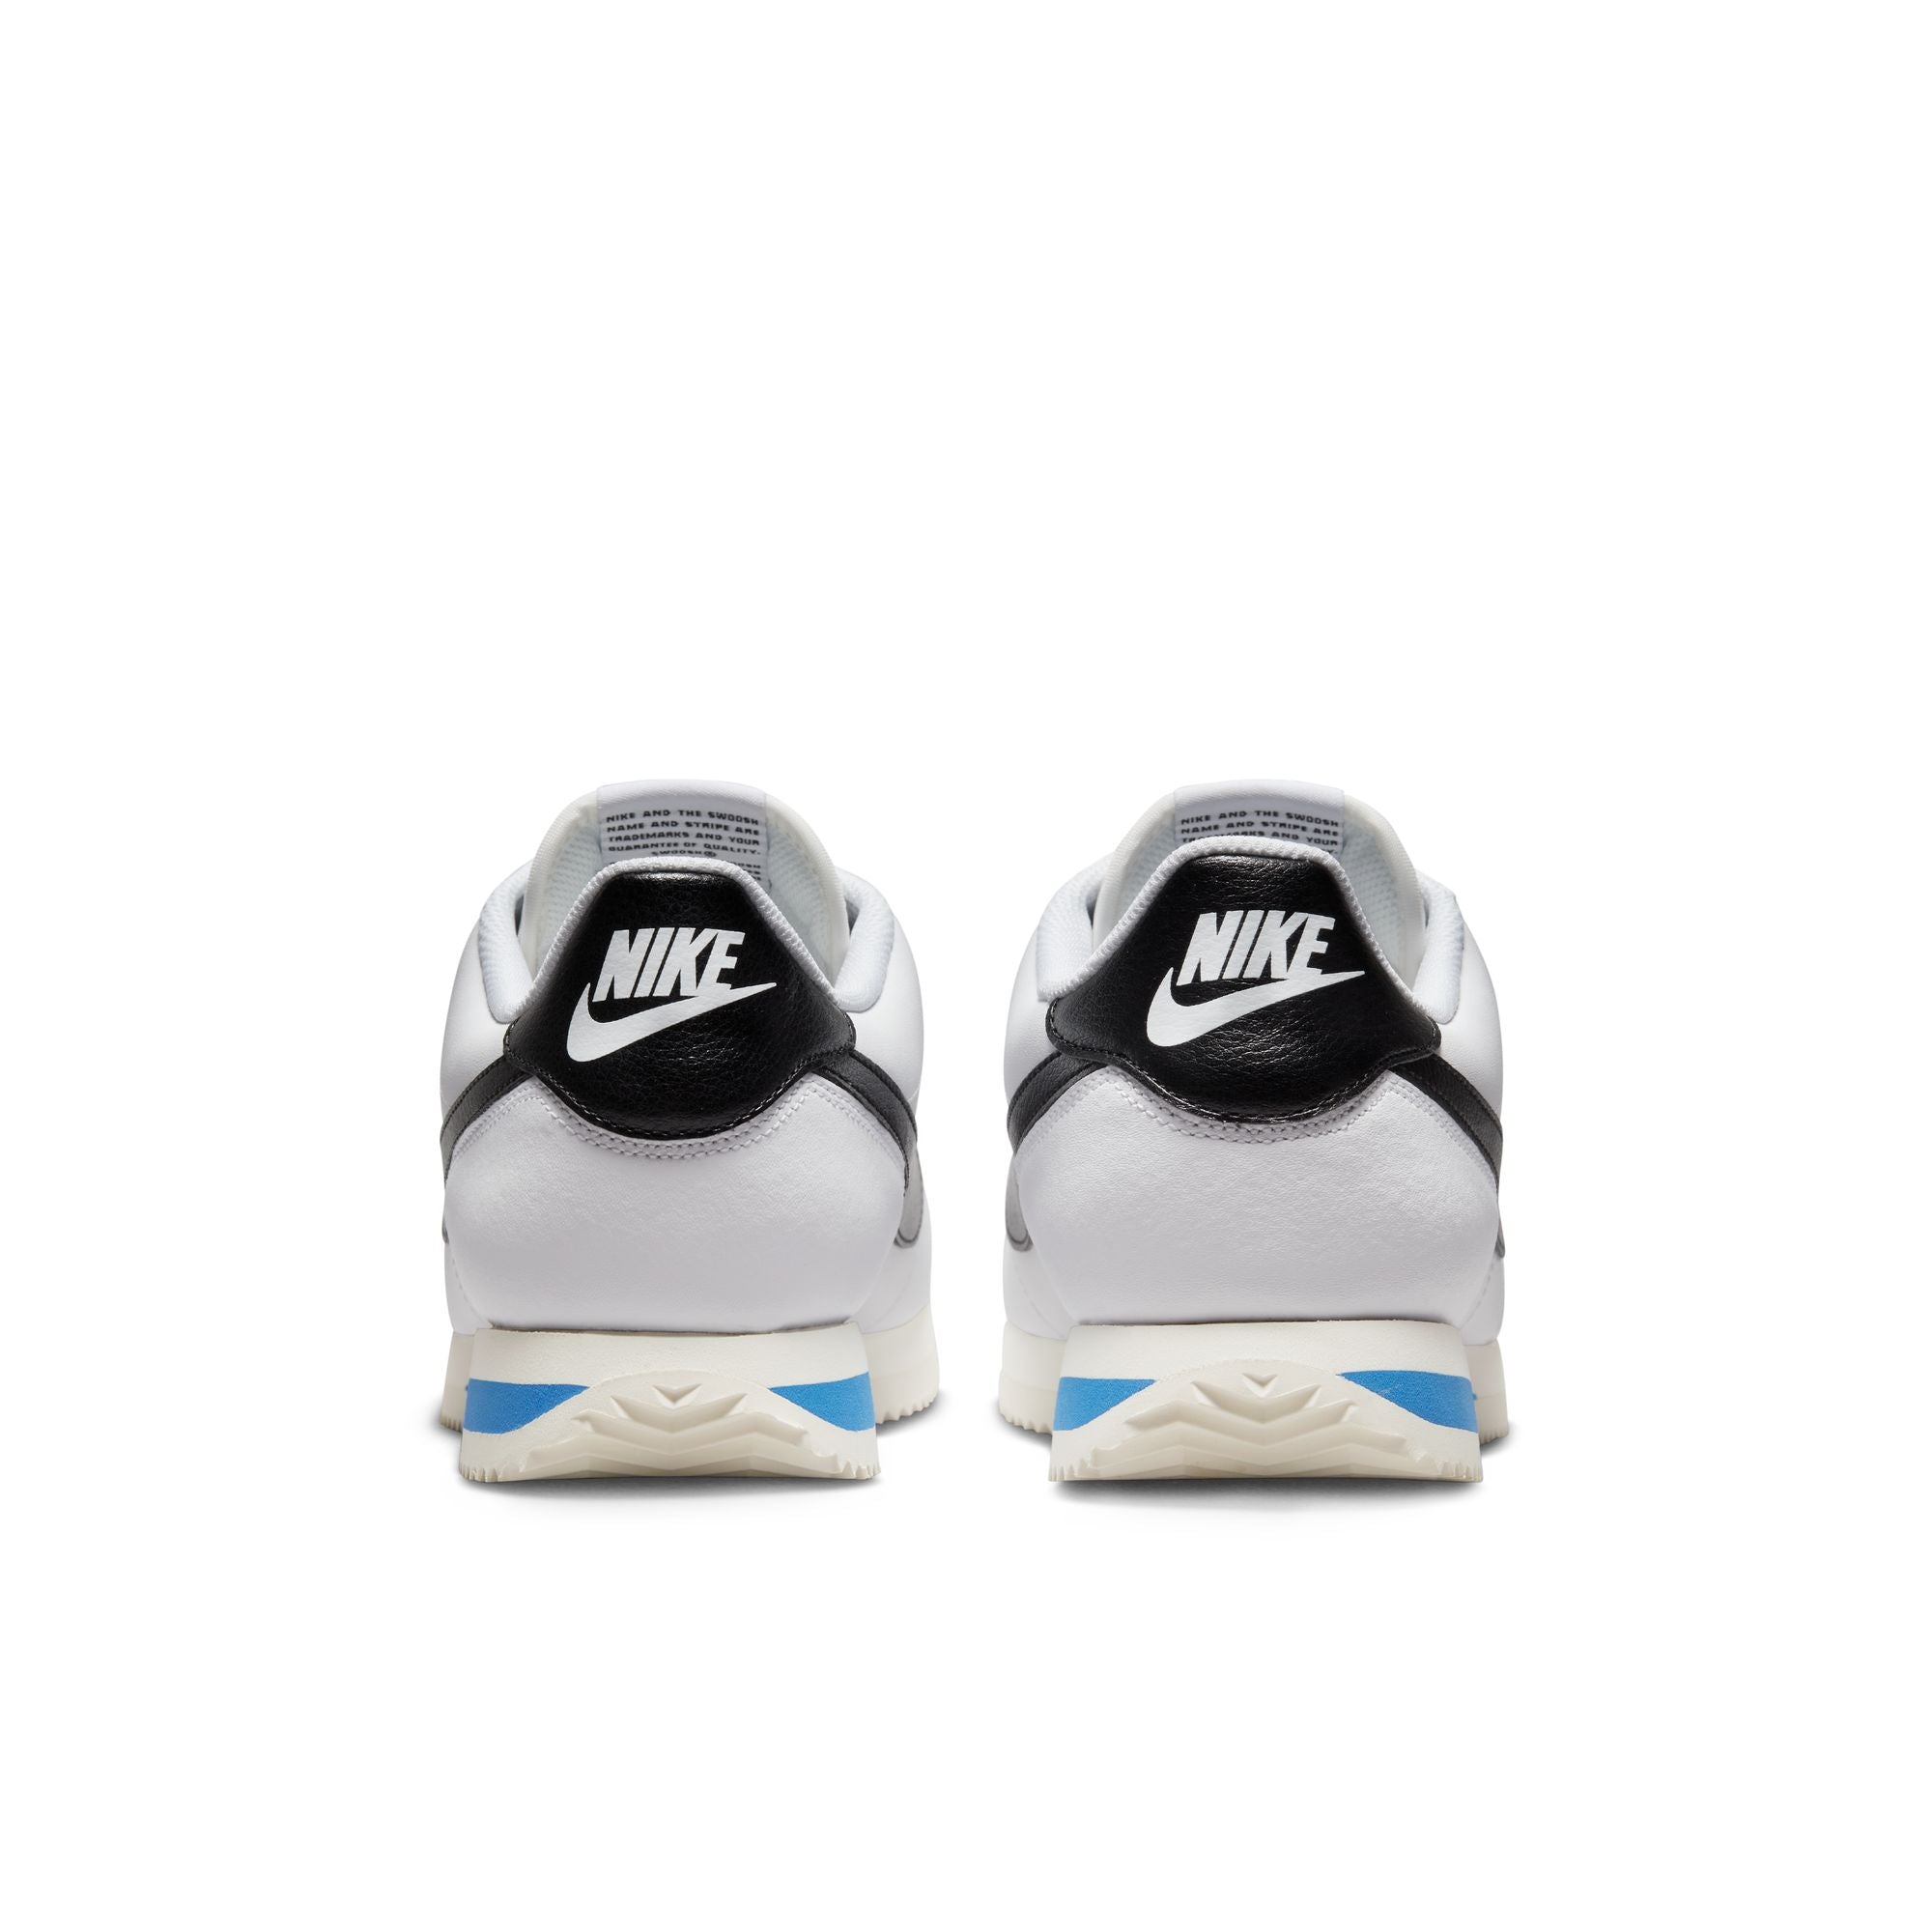 NIKE - Nike Cortez - (White/Black-Lt Photo Blue-Sail)